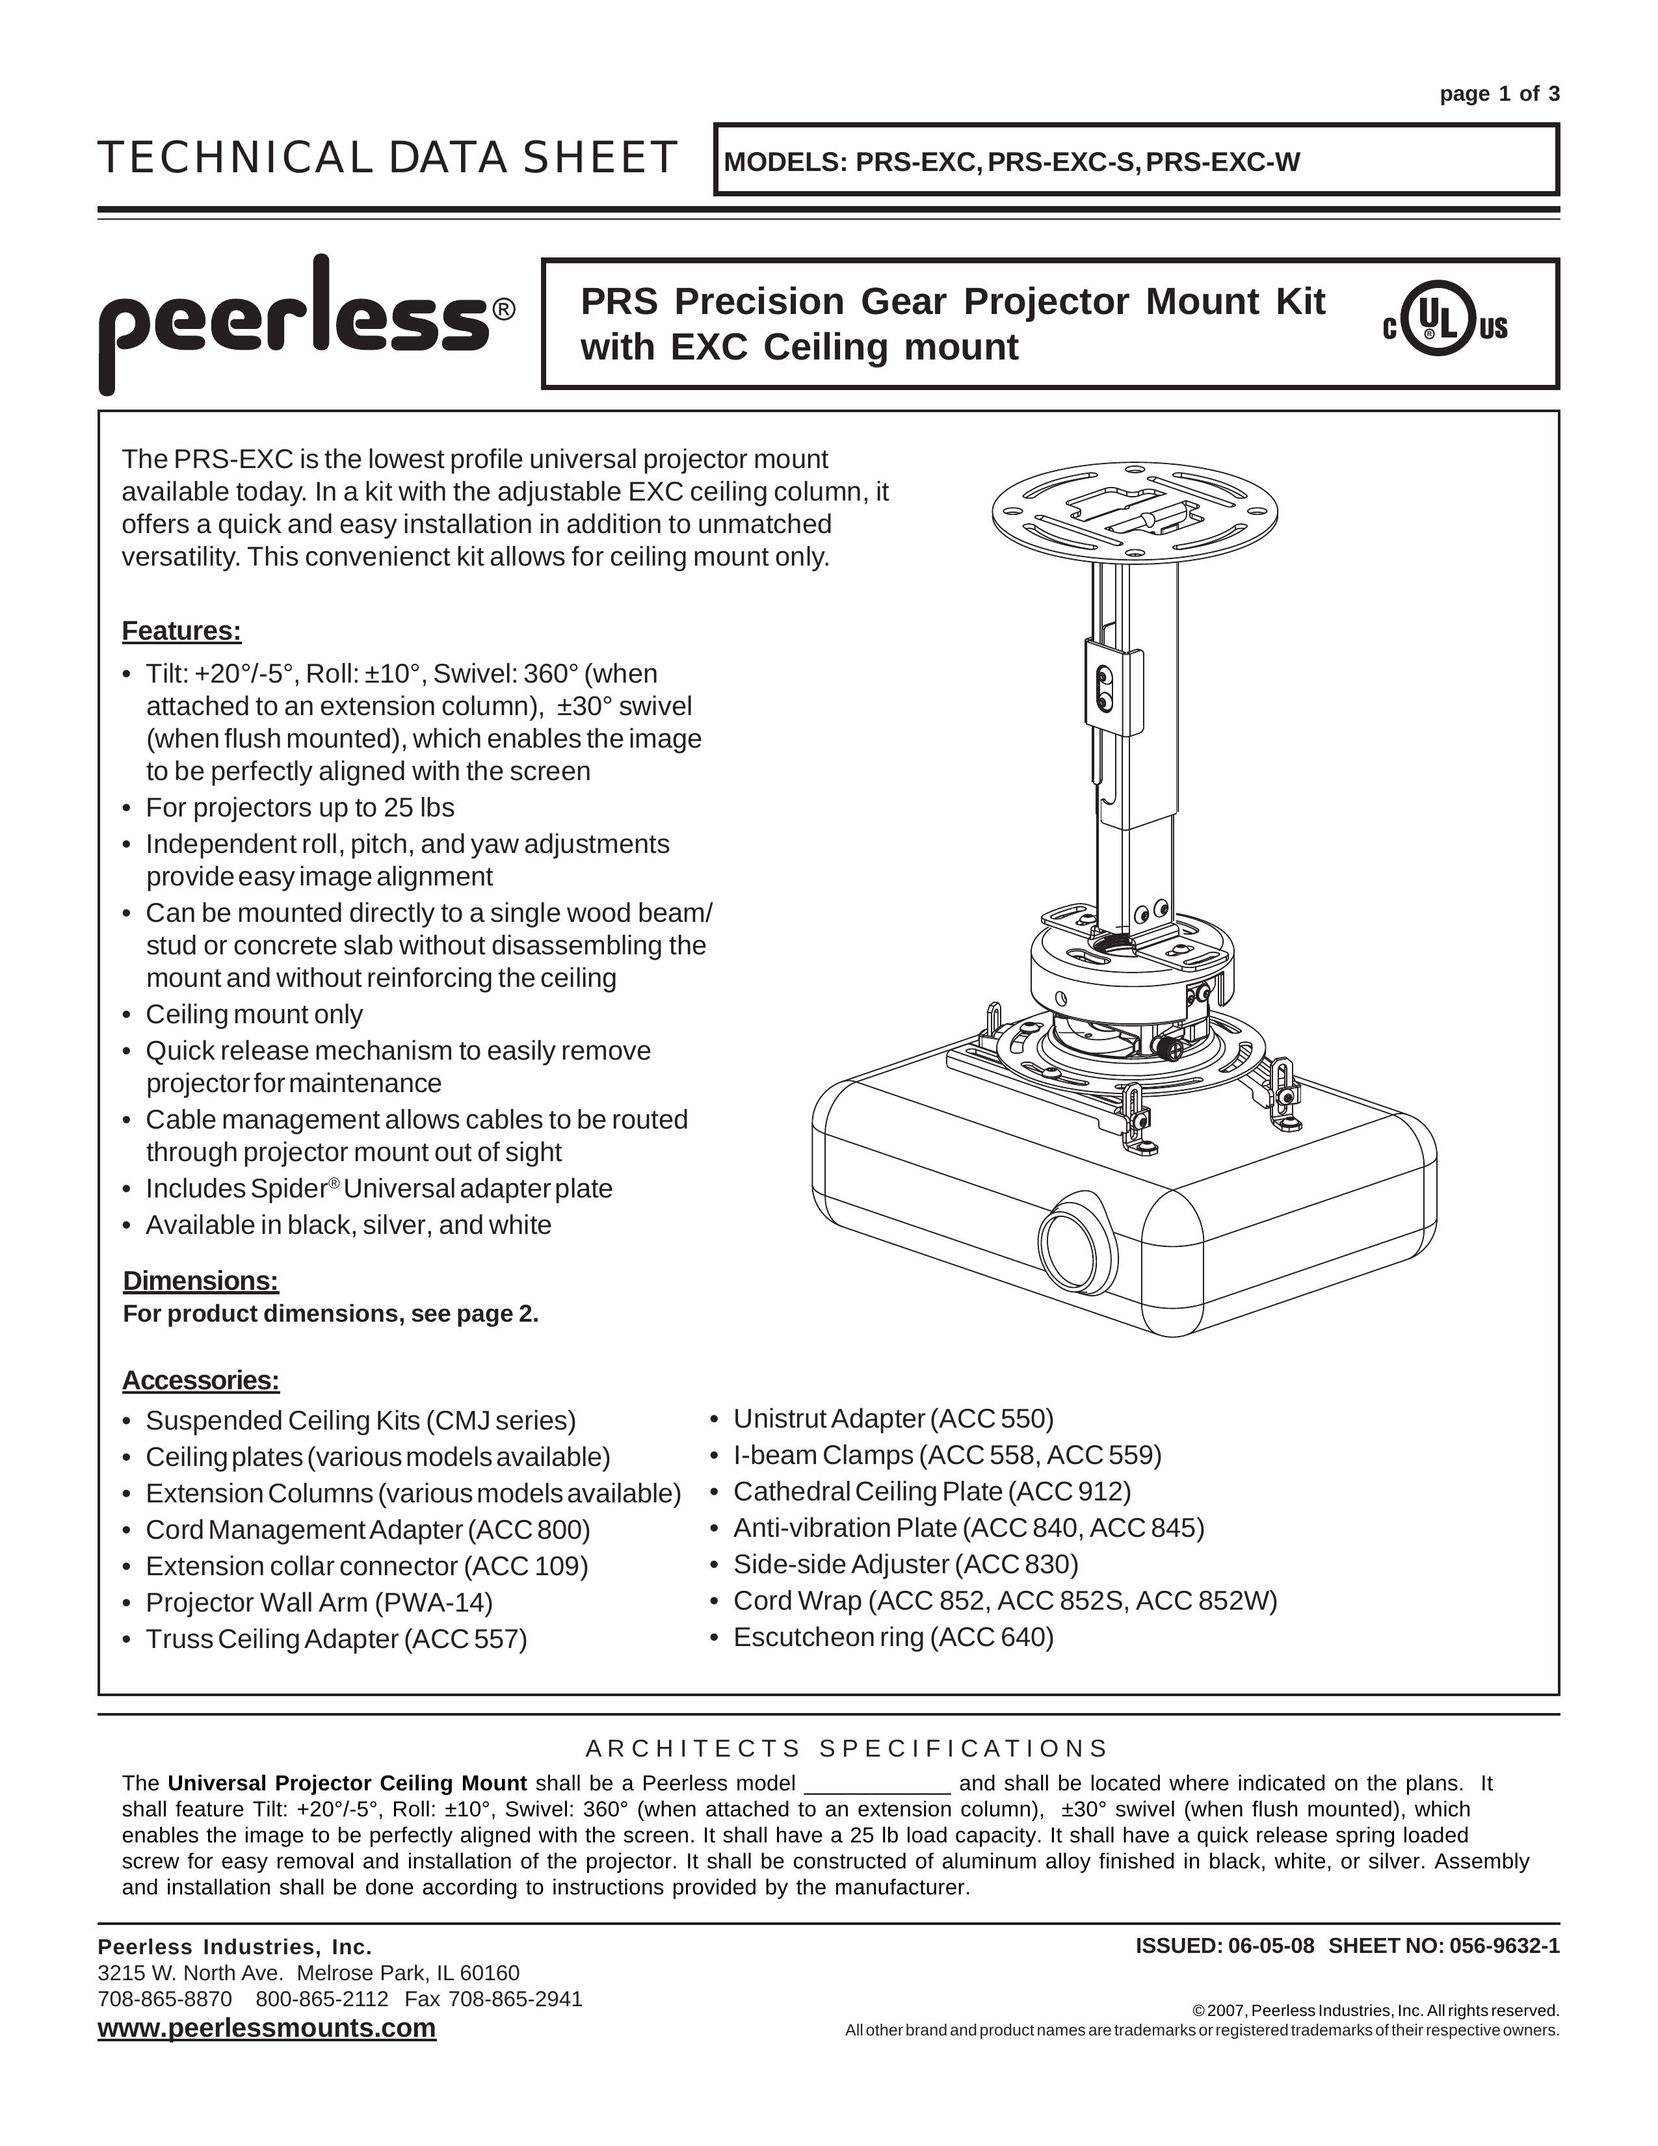 Peerless Industries PRS-EXC-W Projector Accessories User Manual